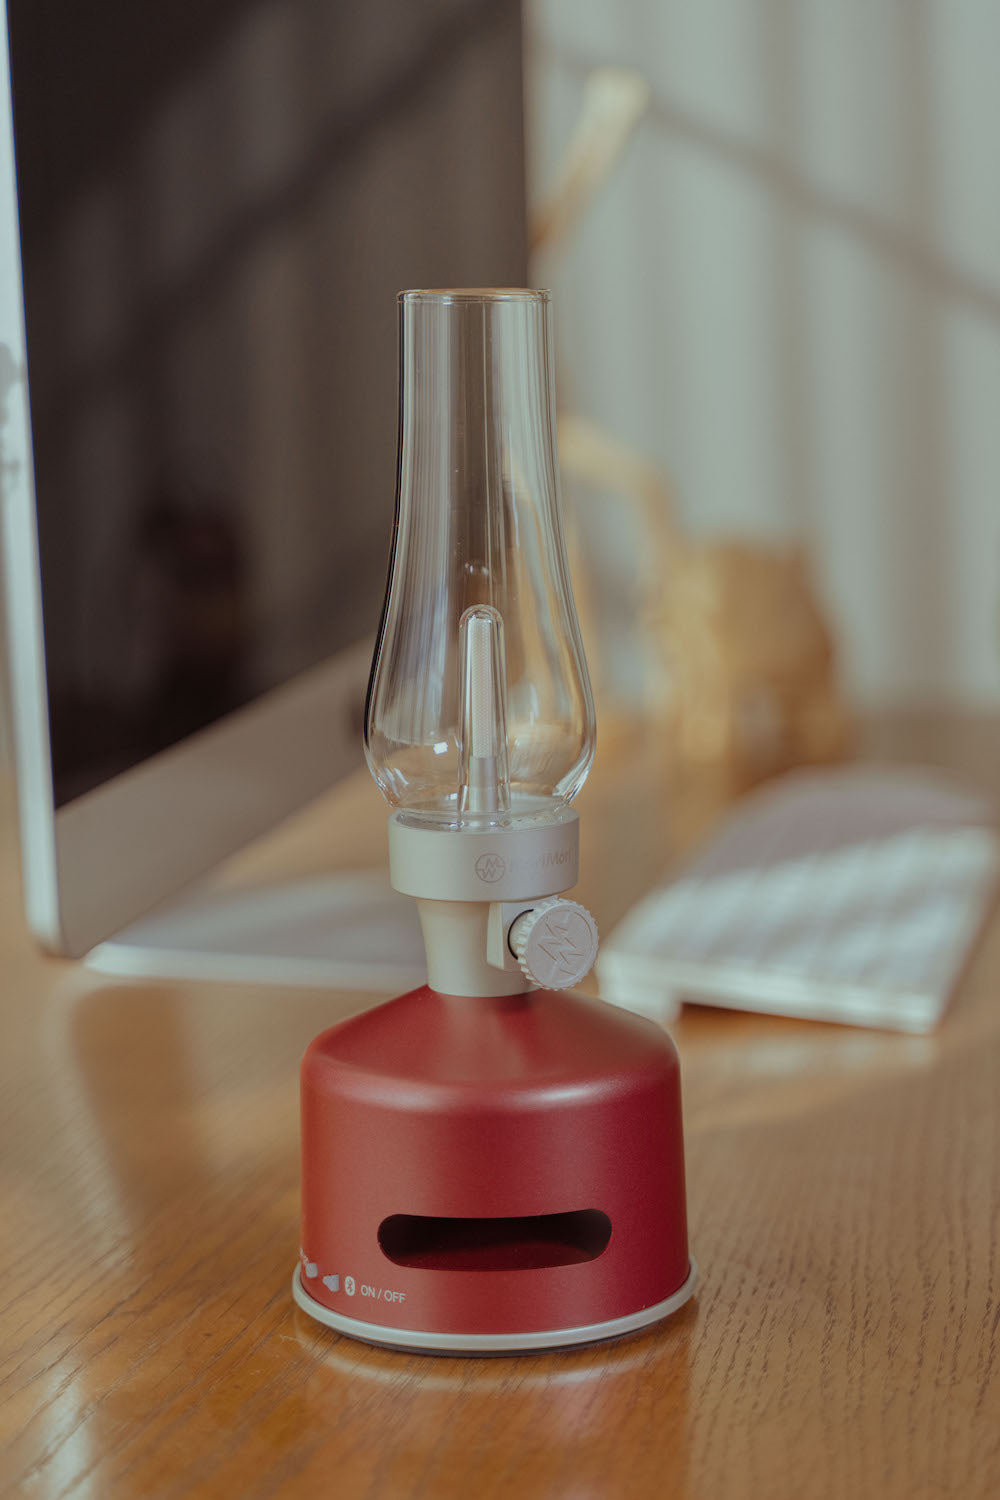 LED Lantern with Bluetooth Speaker - Lumi - Red